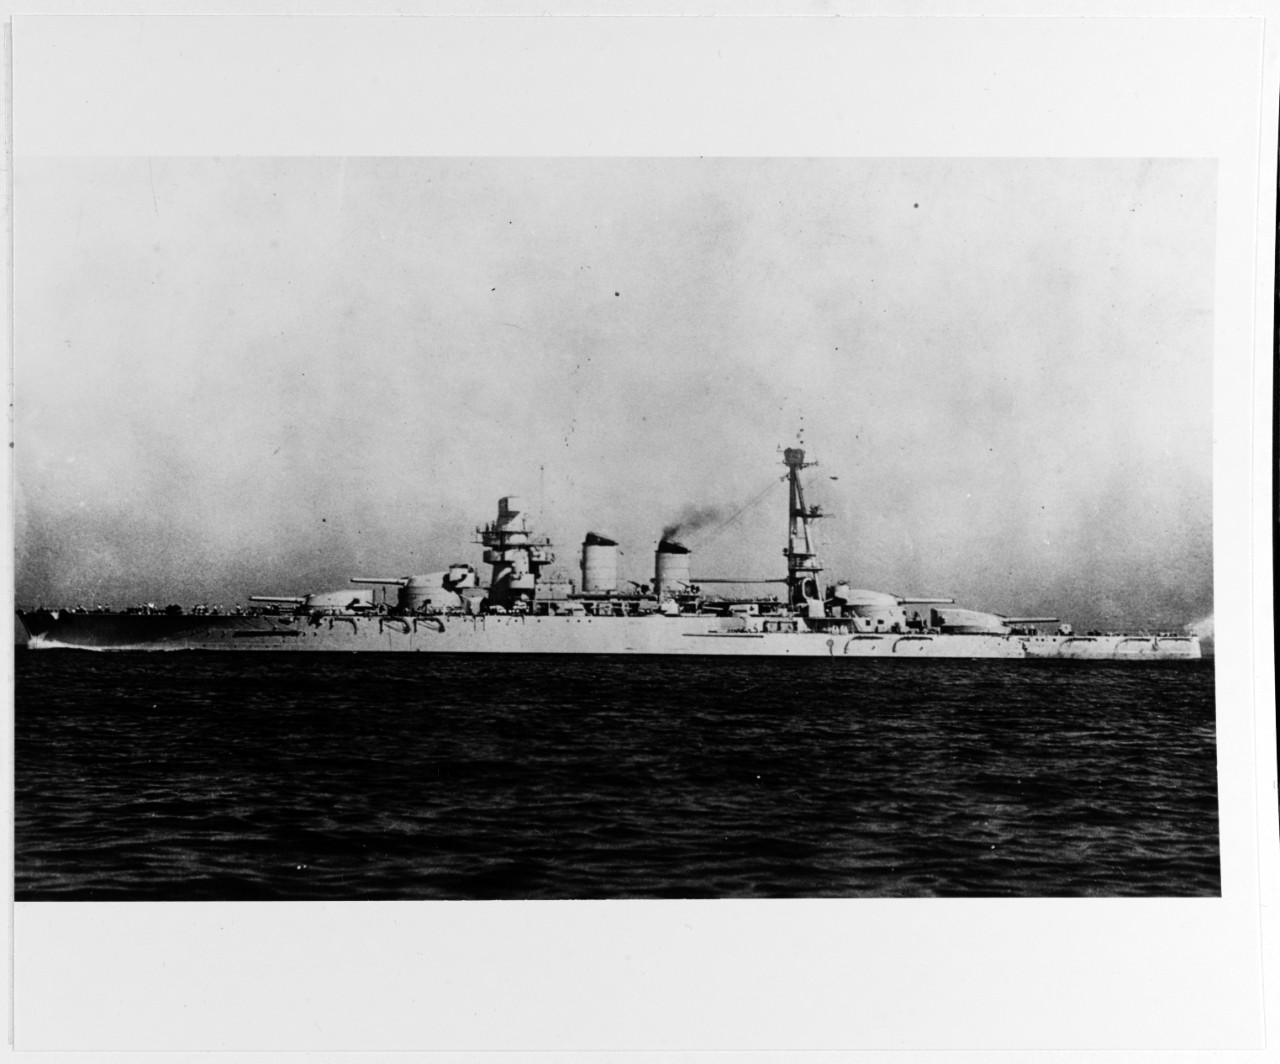 CONTE DI CAVOUR (Italian battleship, 1911-1945)